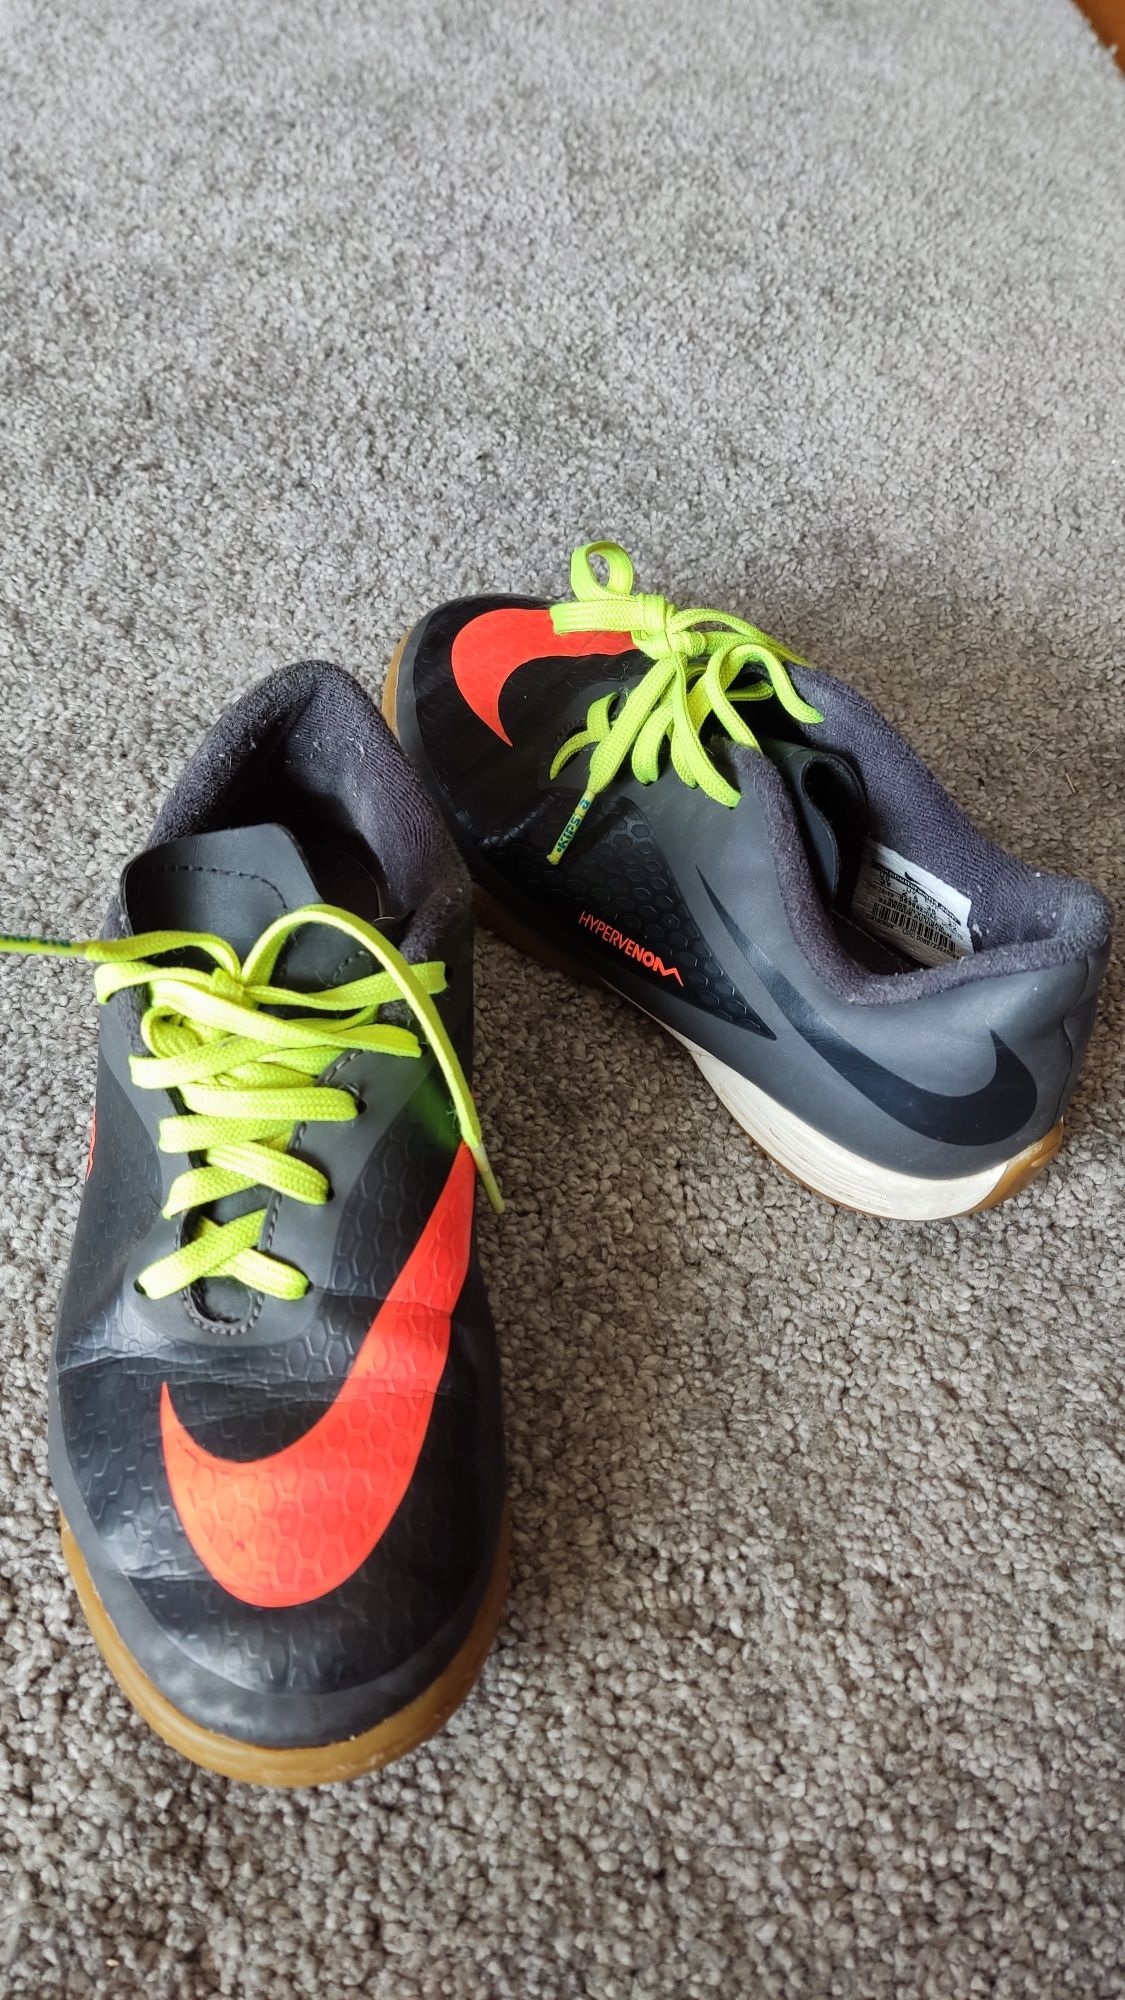 Buty piłkarskie Nike HyperVenom, rozmiar 35